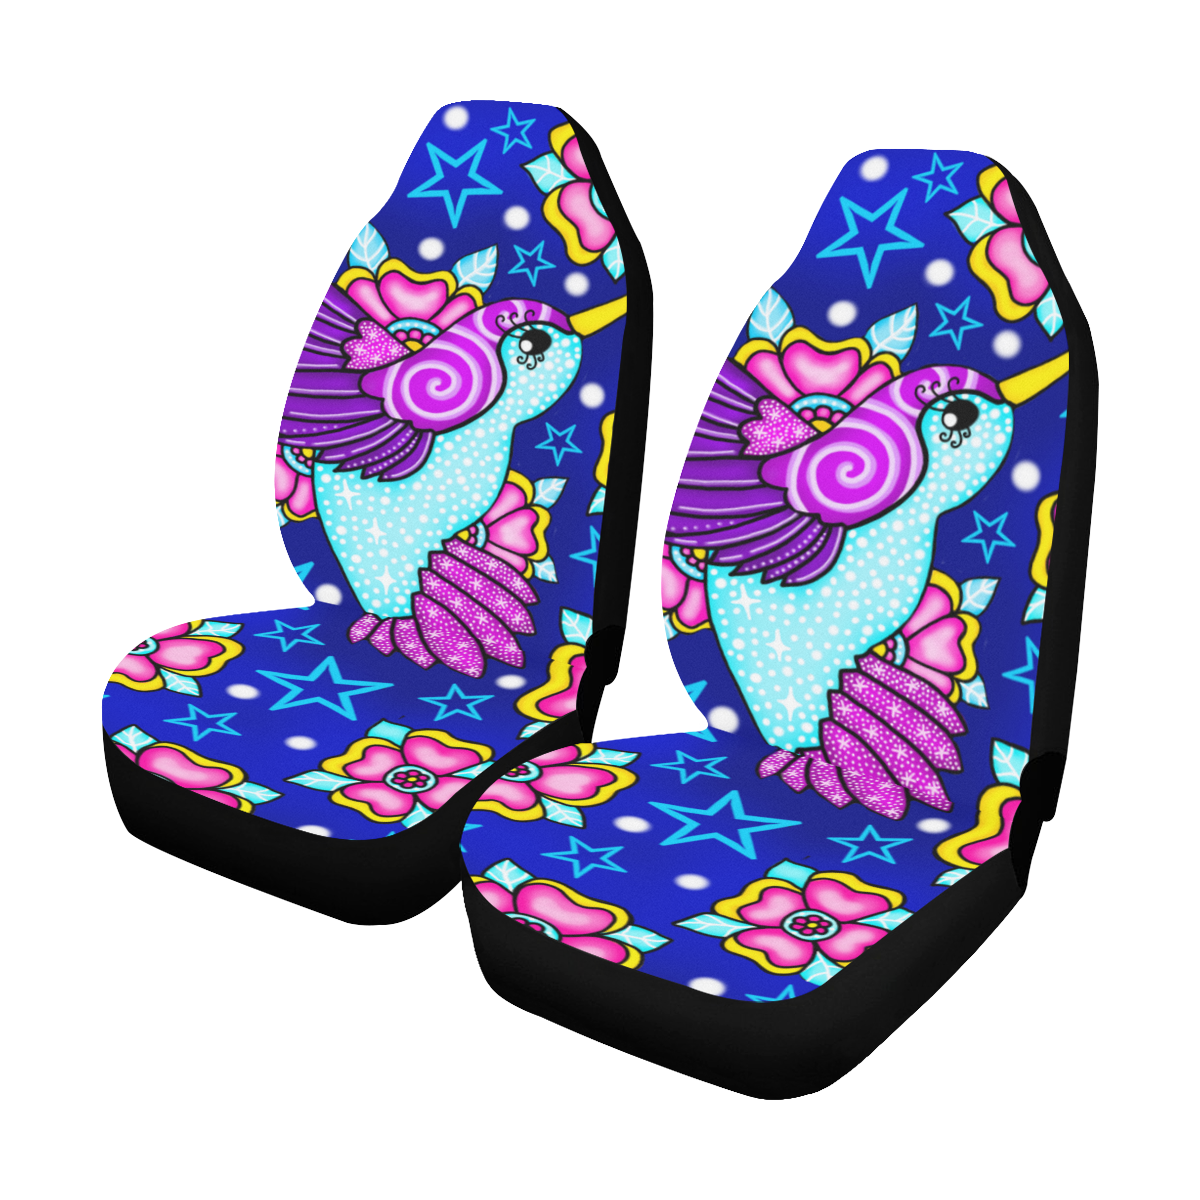 Hummingbird Car Seat Covers (Set of 2)